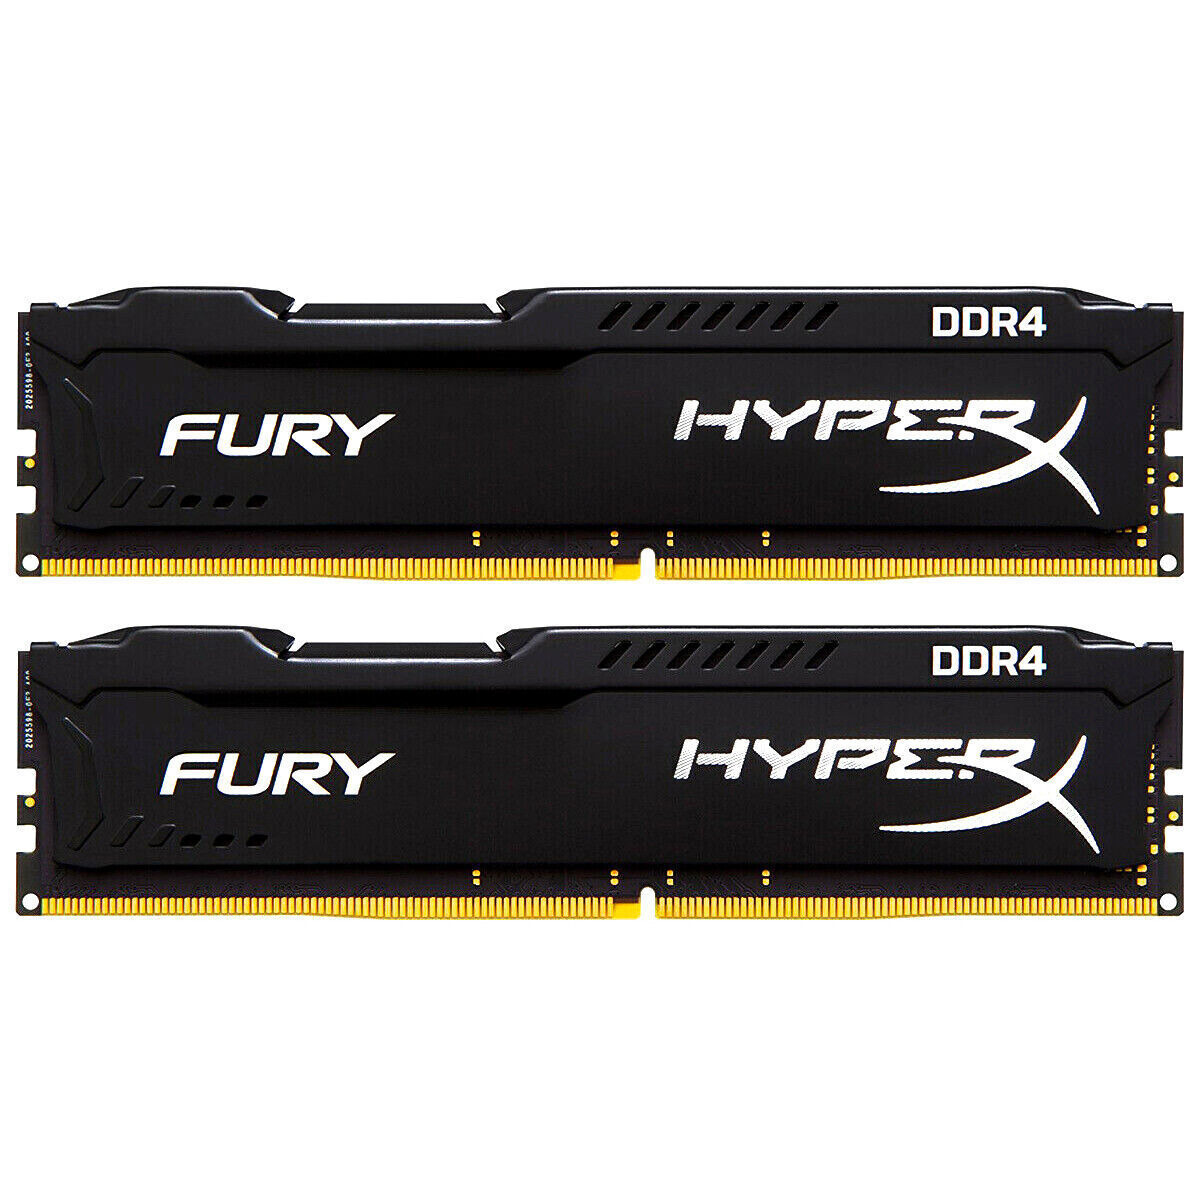 HyperX FURY DDR4 8GB 3200 MHz PC4-25600 Desktop RAM Memory DIMM 288PINS 2x 8GB